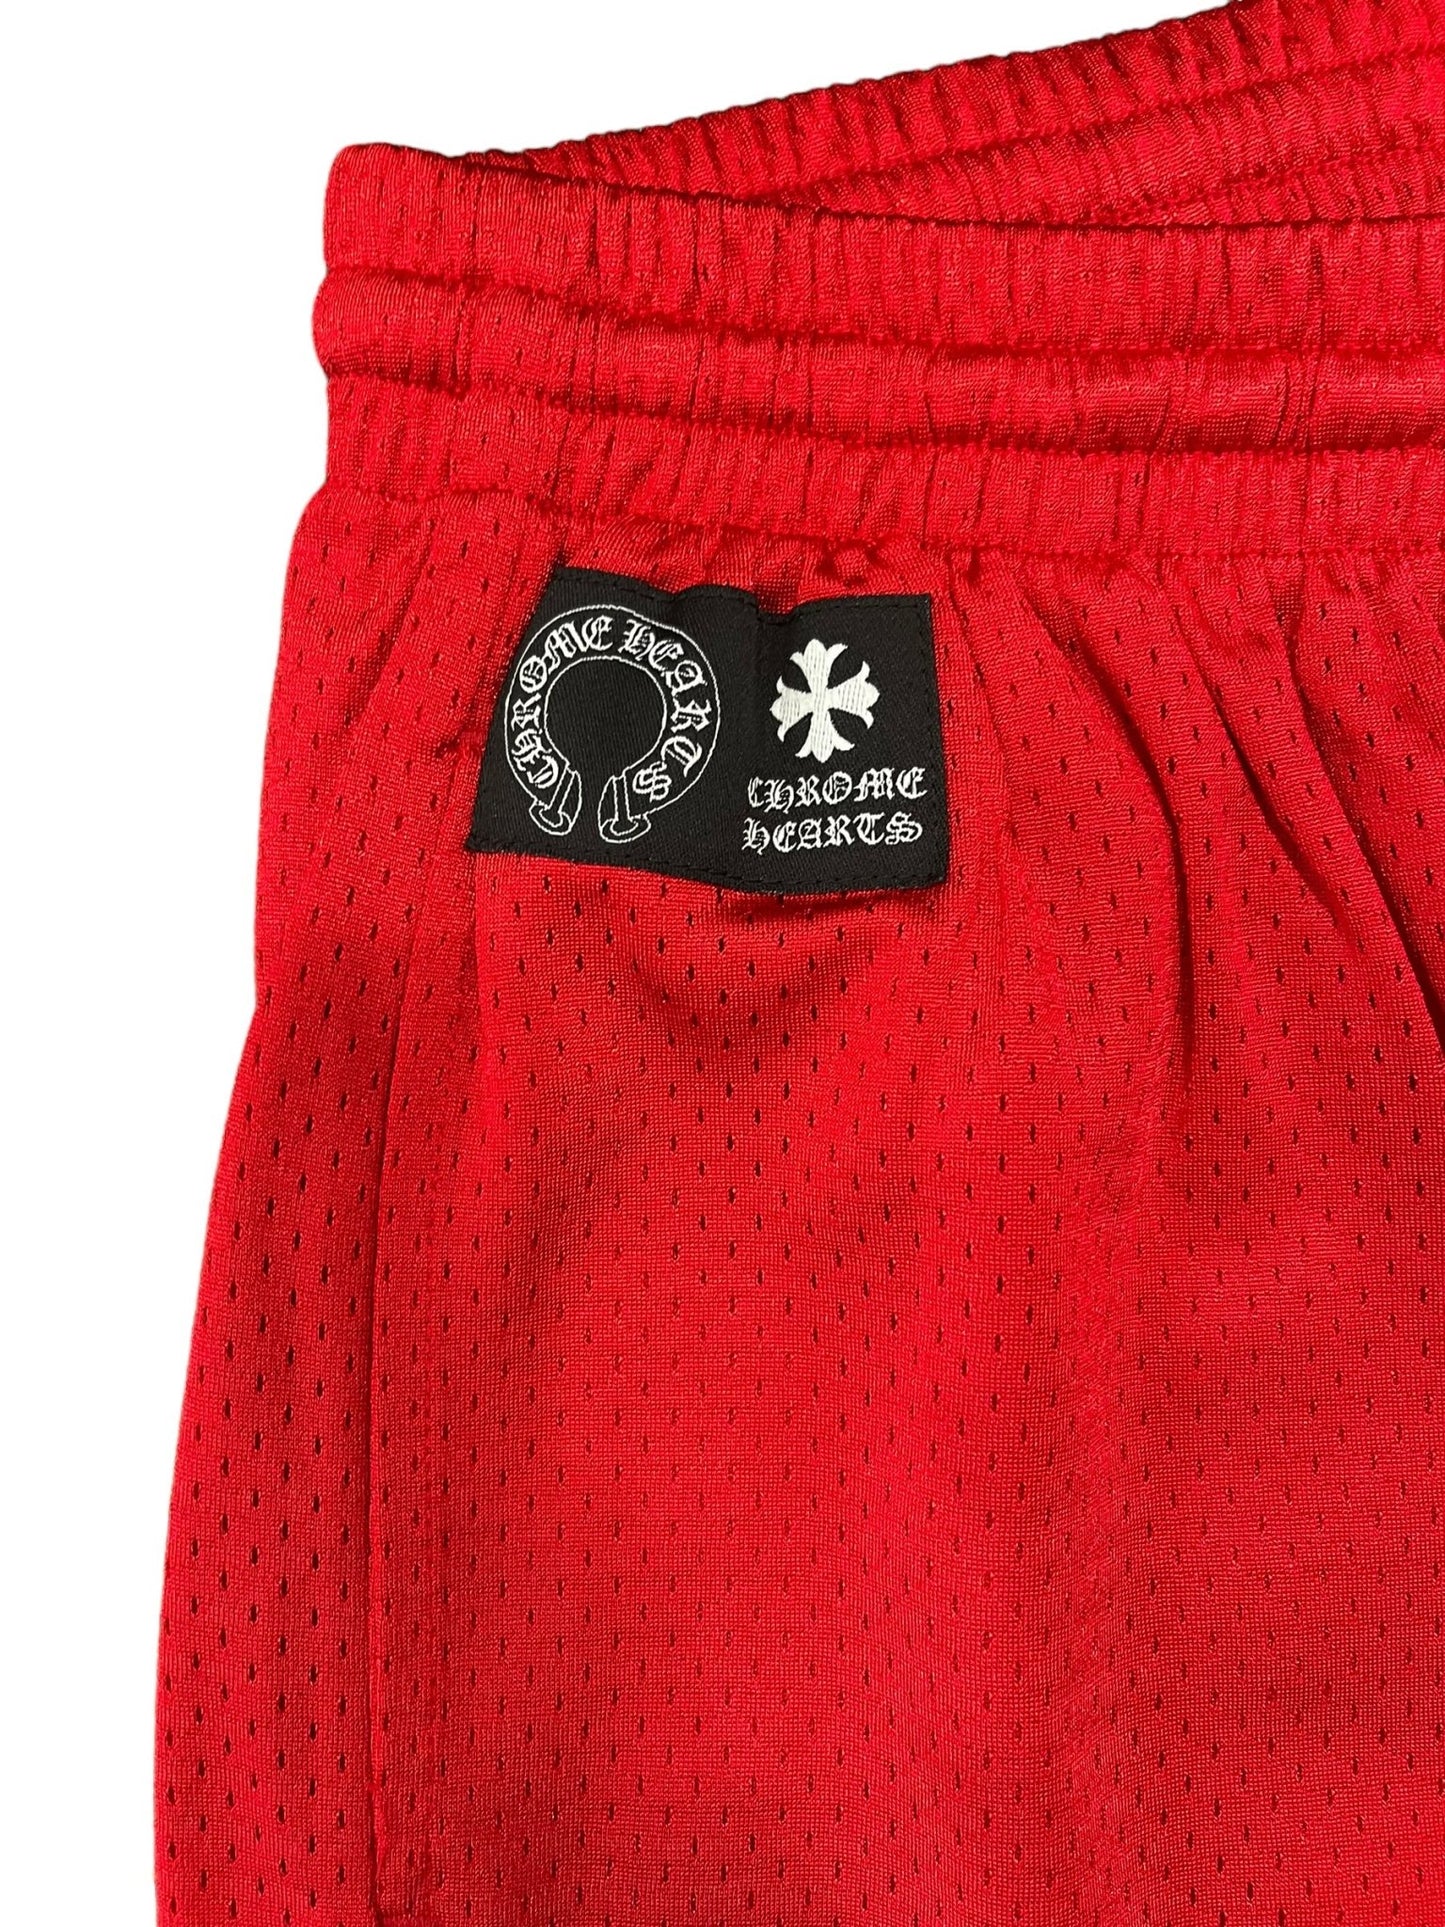 Chrome Hearts Matty Boy "FORM" Mesh Varsity Shorts Red - Paroissesaintefoy Sneakers Sale Online